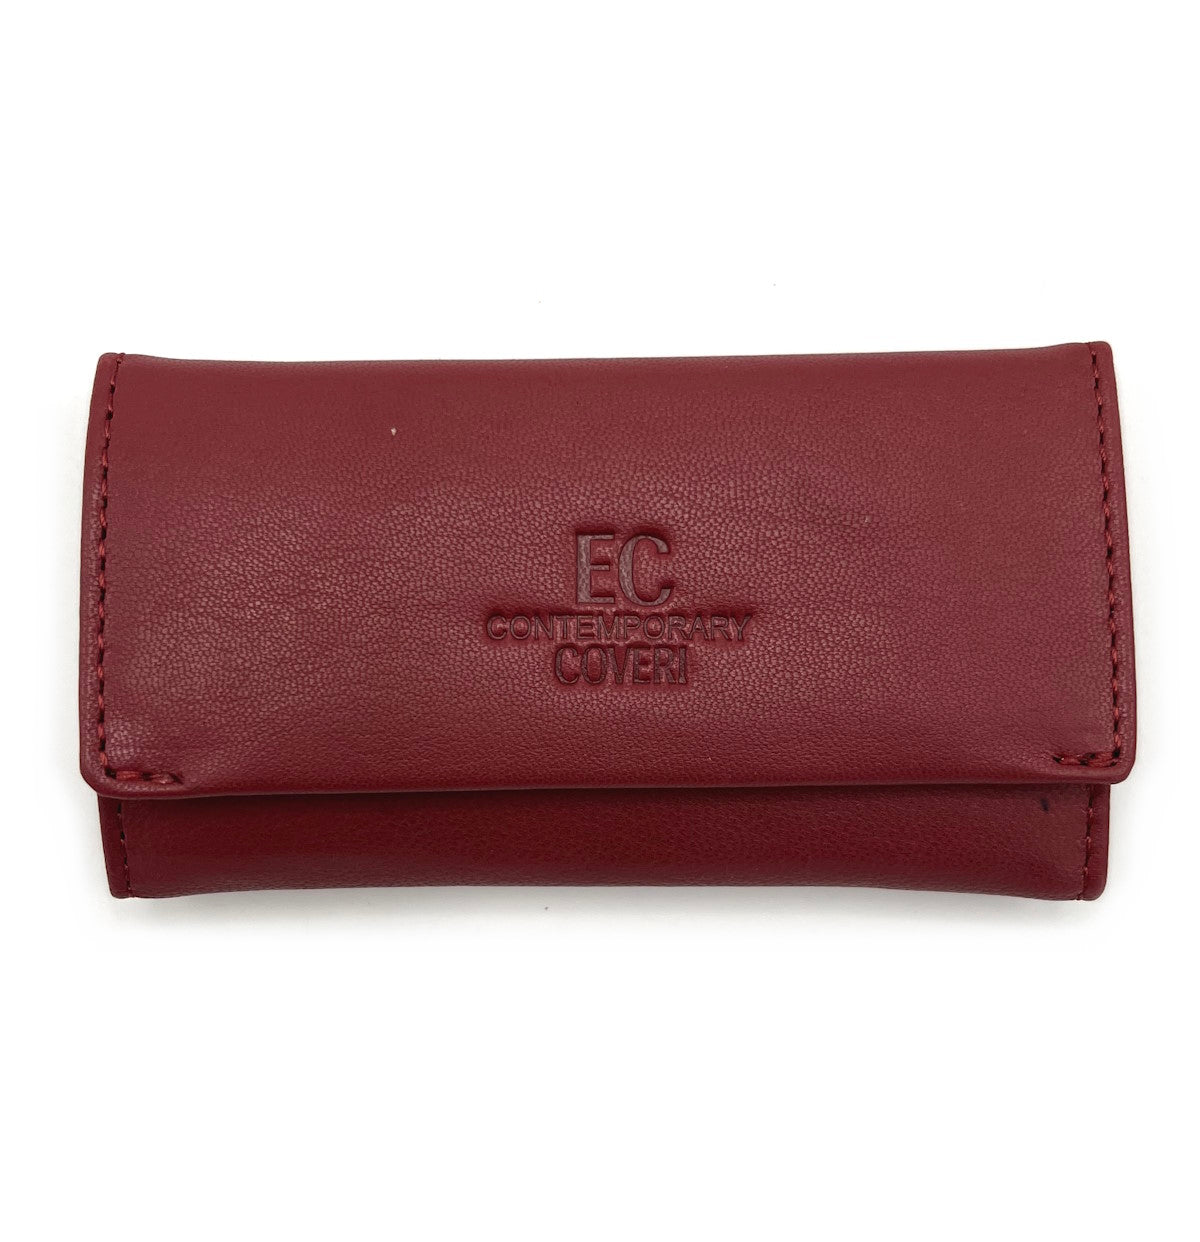 Genuine leather Key Holder, Brand EC COVERI, art. EC23760-46